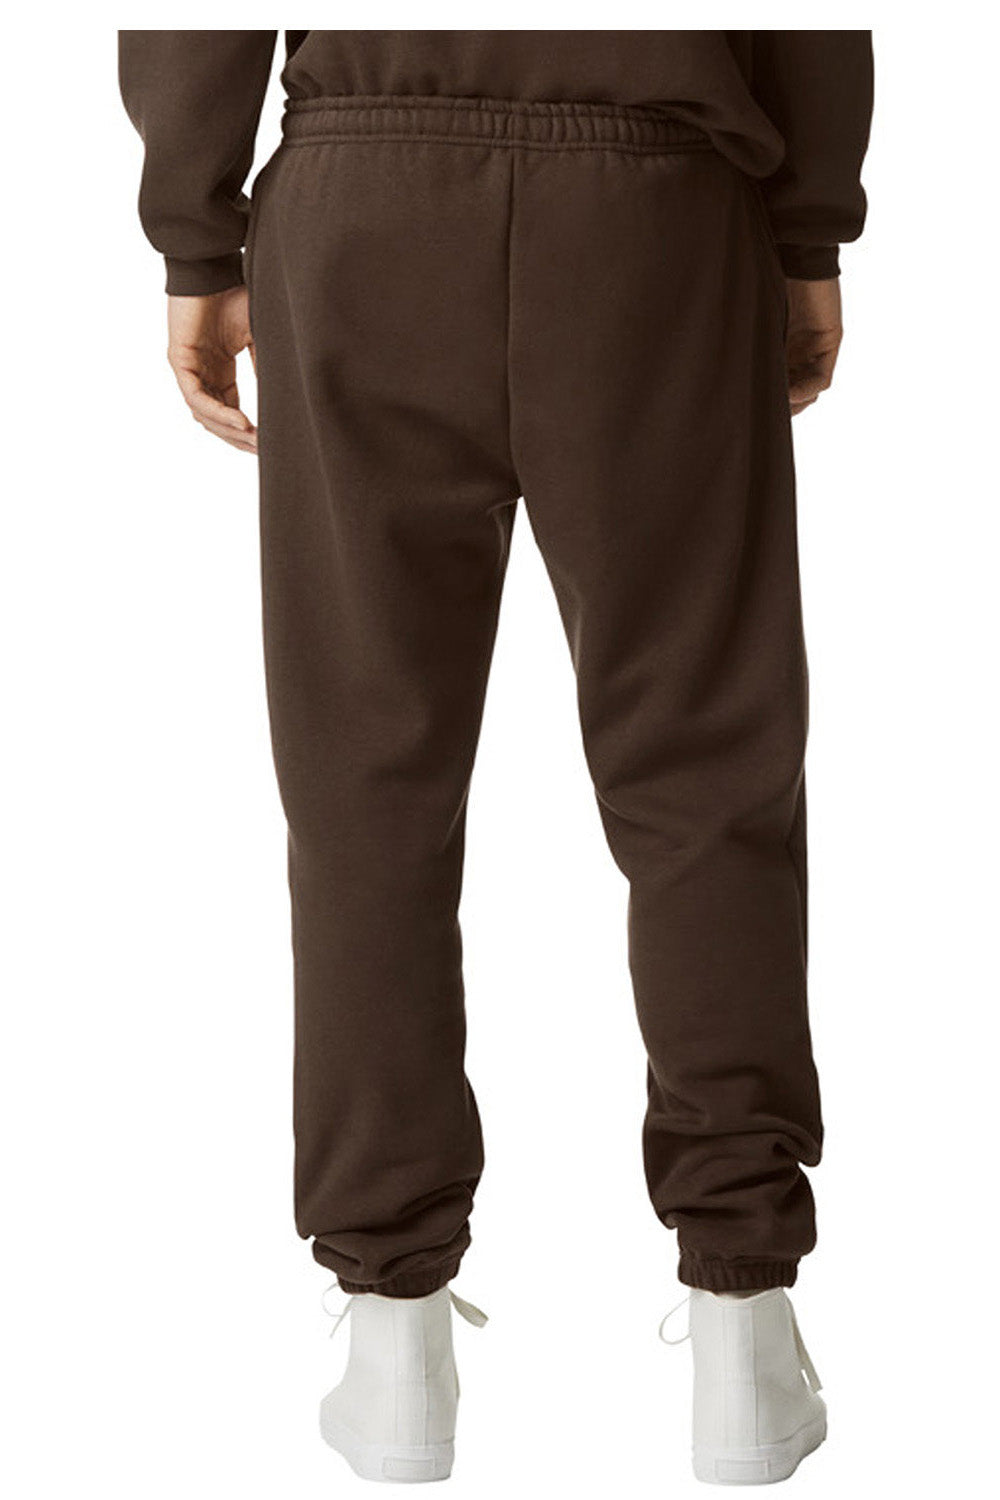 American Apparel RF491 Mens ReFlex Fleece Sweatpants w/ Pockets Brown Model Back